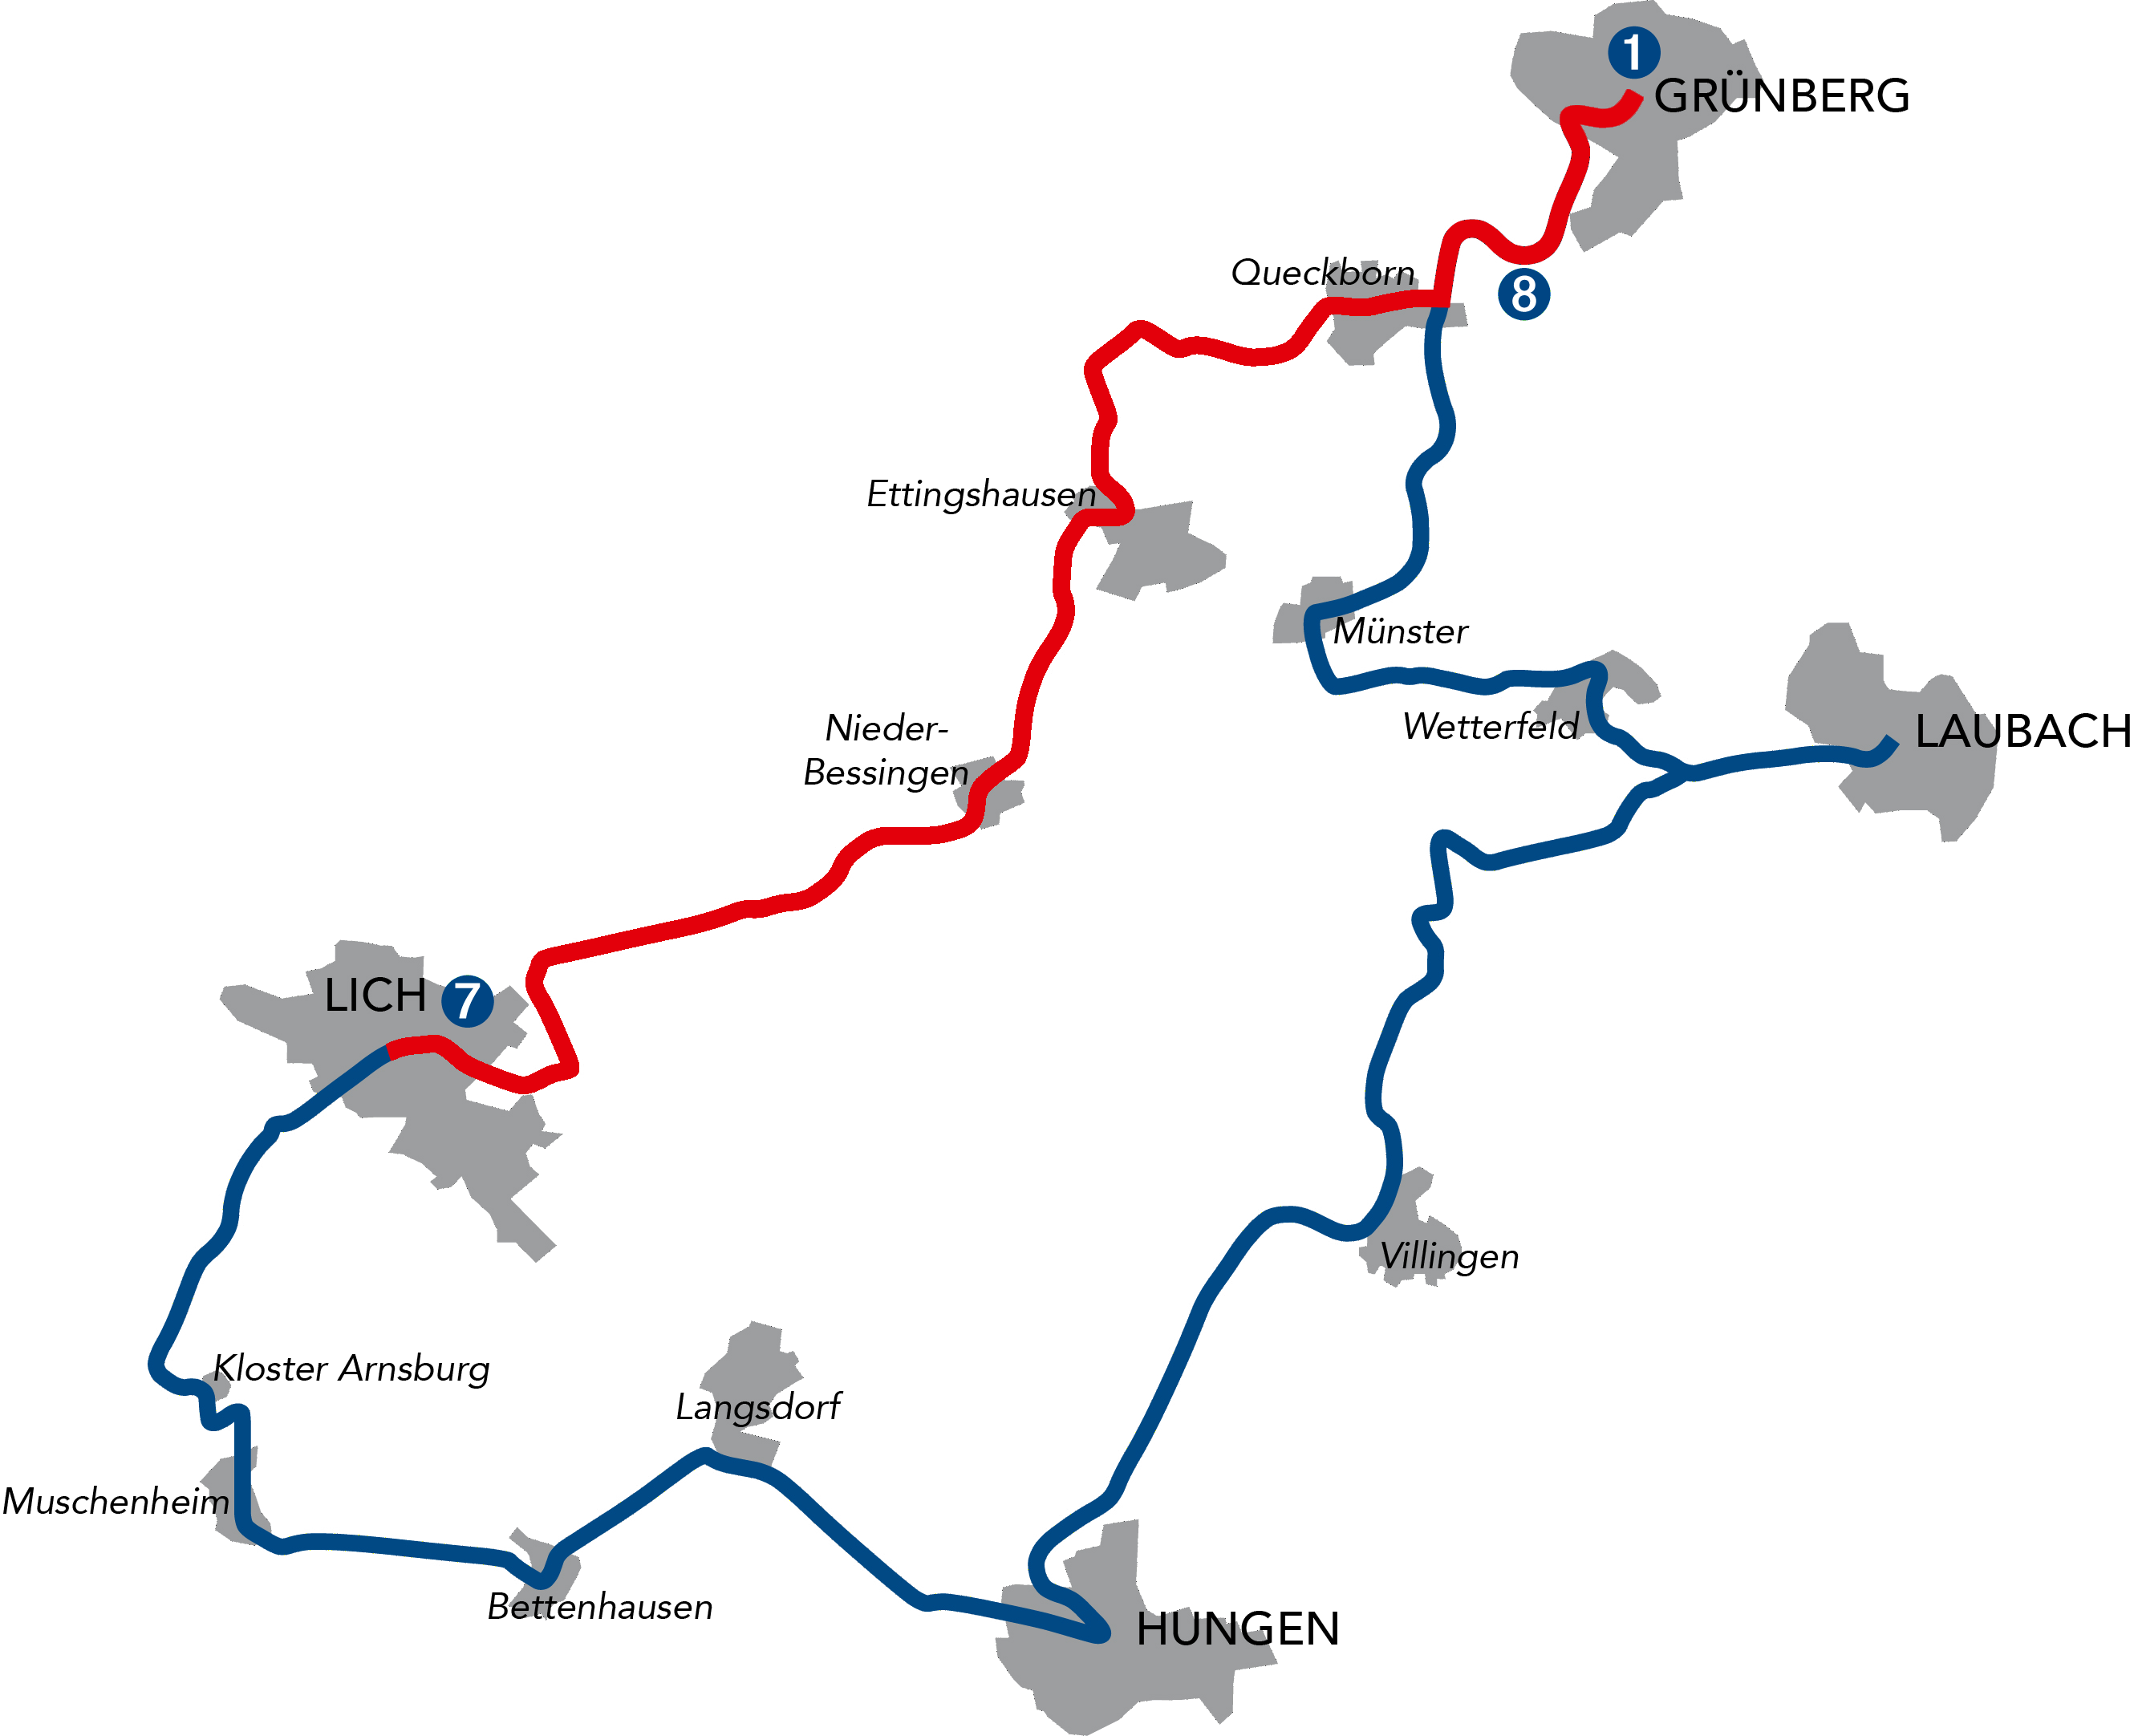 RRR Route Lich Gruenberg